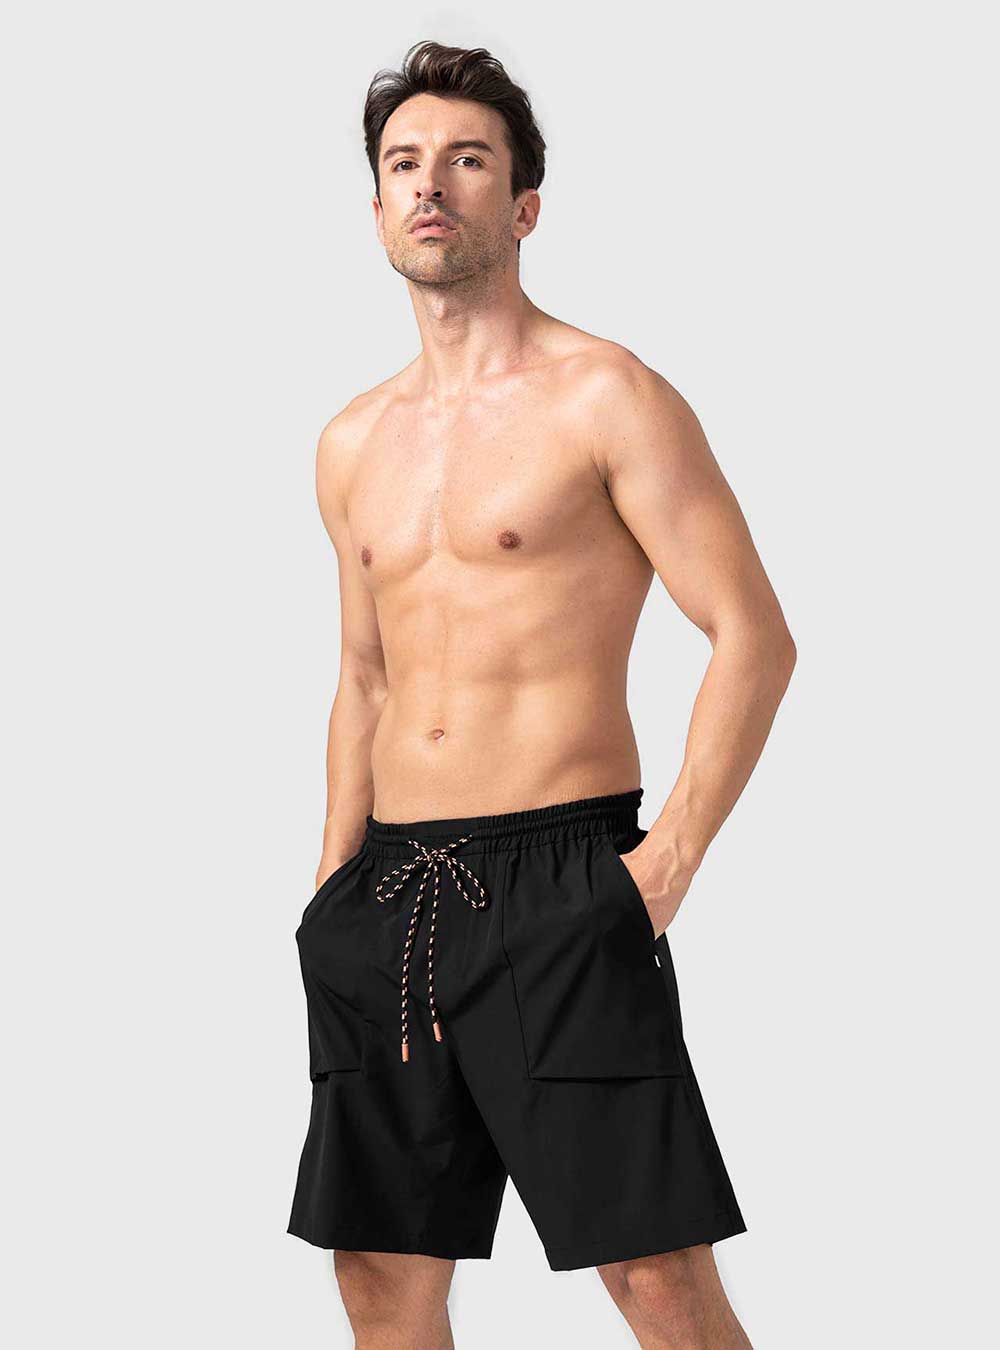 Separatec 丨Revolutionary Men's Dual Pouch Underwear